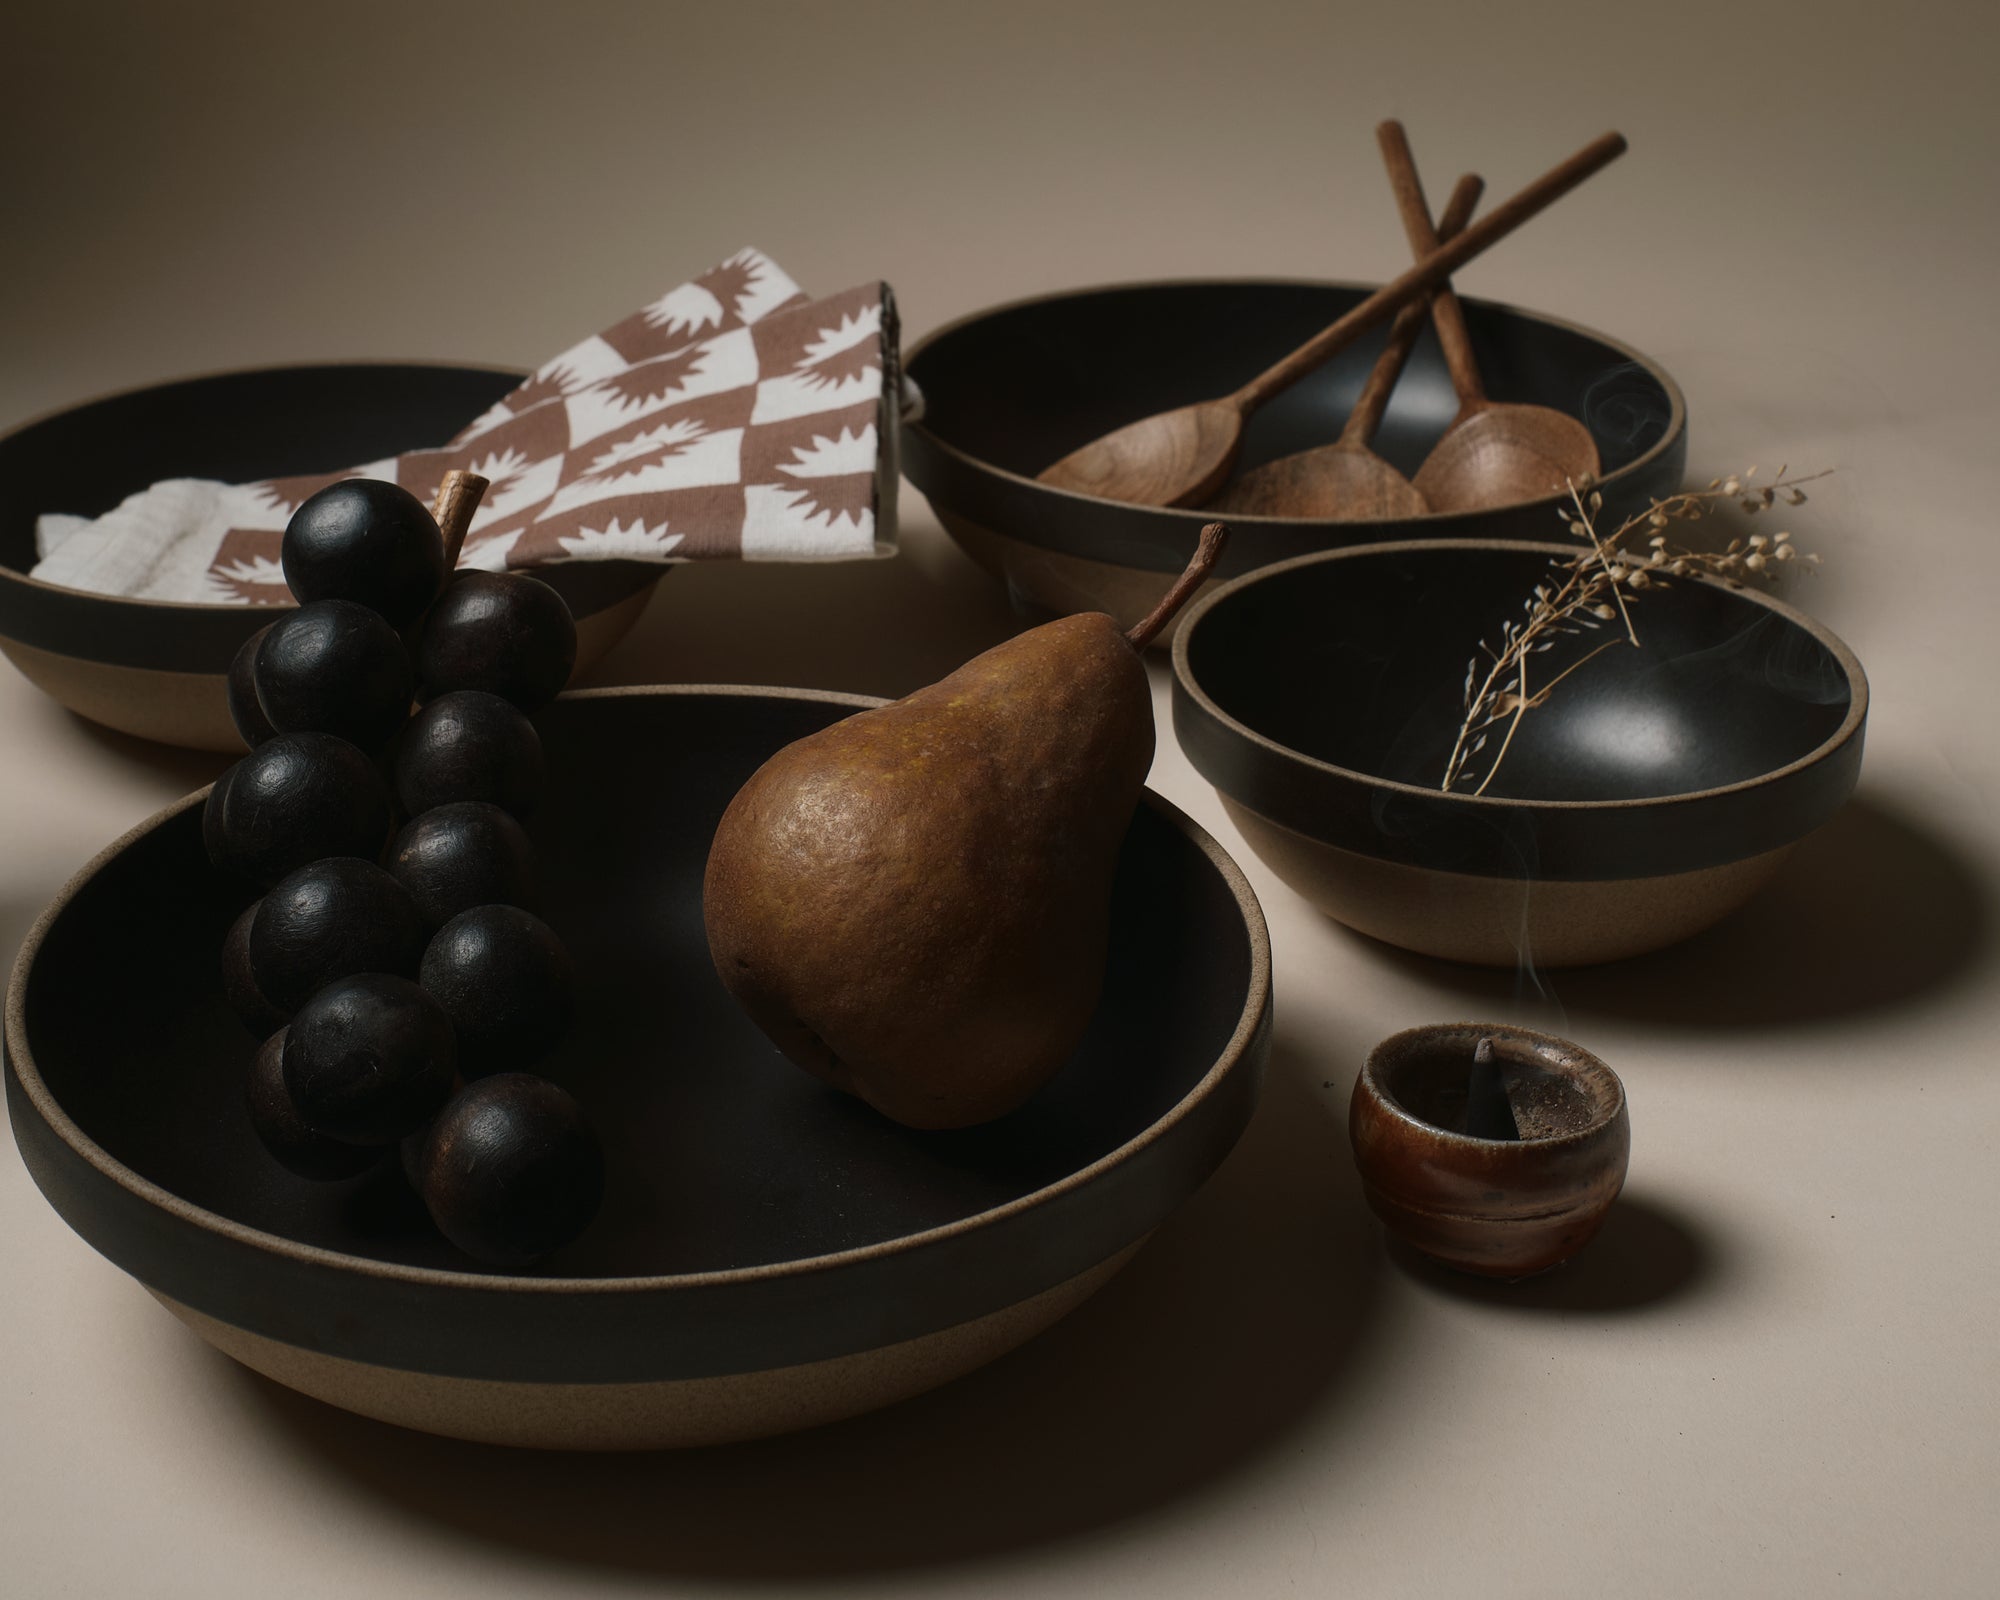 Hasami Porcelain Round Bowl - Medium